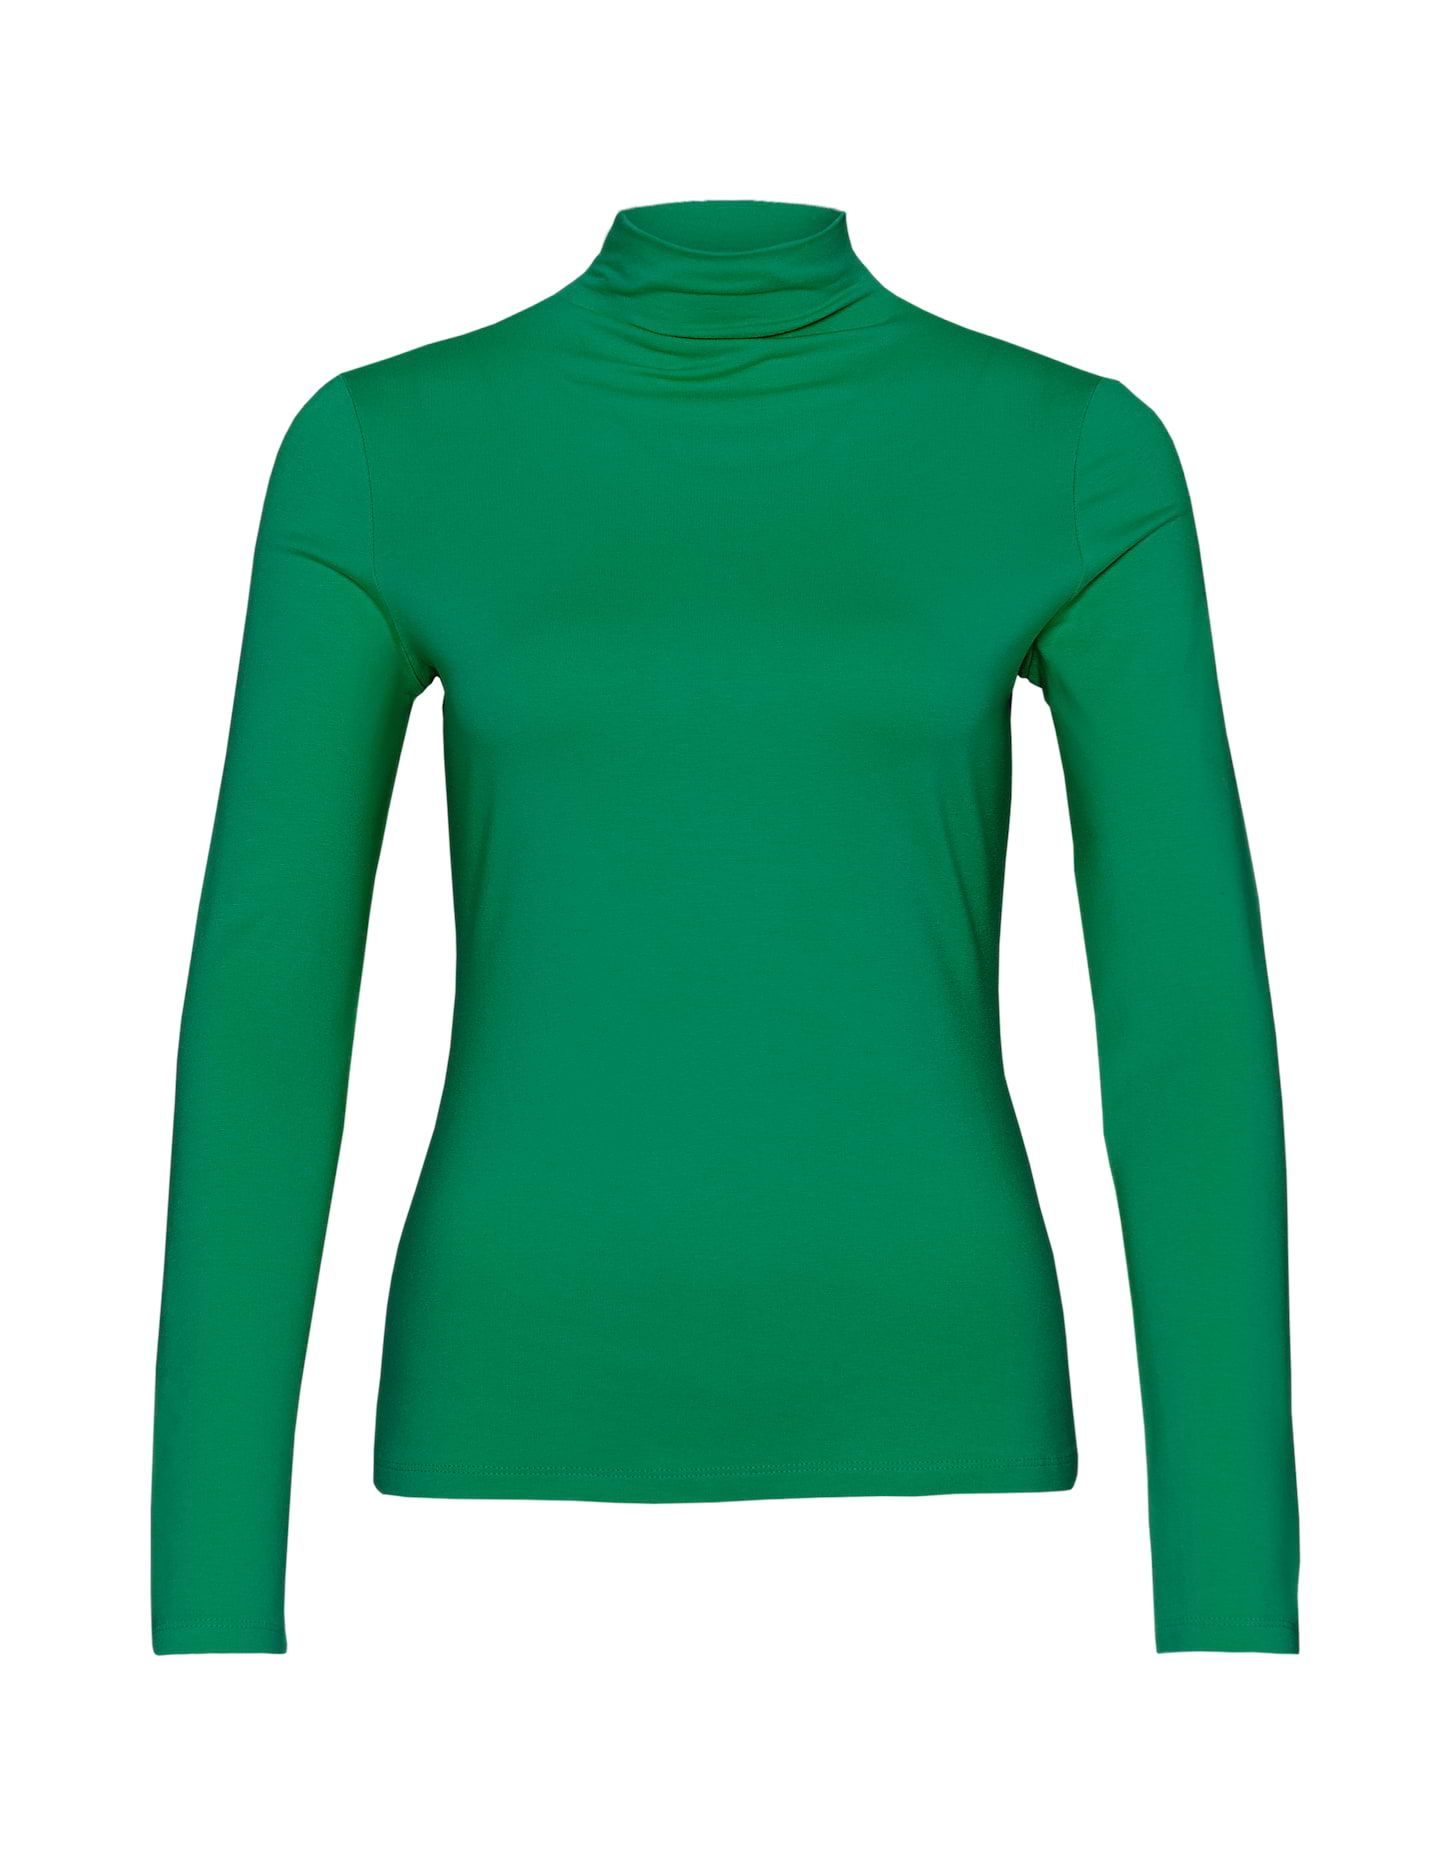 T-shirt OPUS sayar tulip green online bestellen | Henri's Fashion